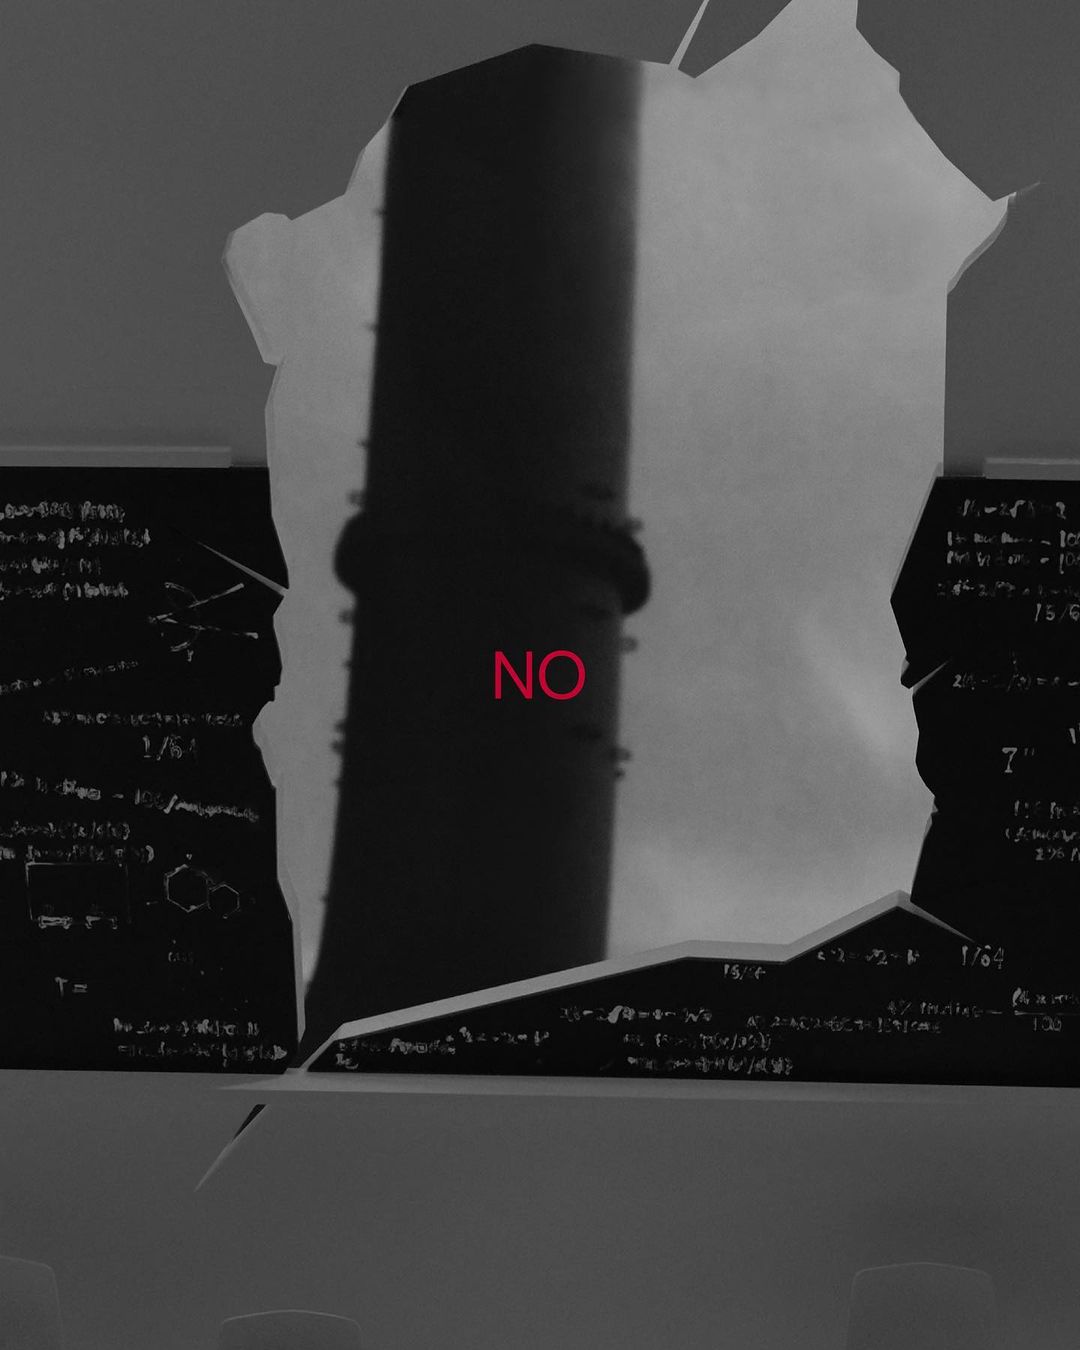 #ENHYPEN DIMENSION : ANSWER Concept Photo (NO ver.)  #DIMENSION_ANSWER #NO…